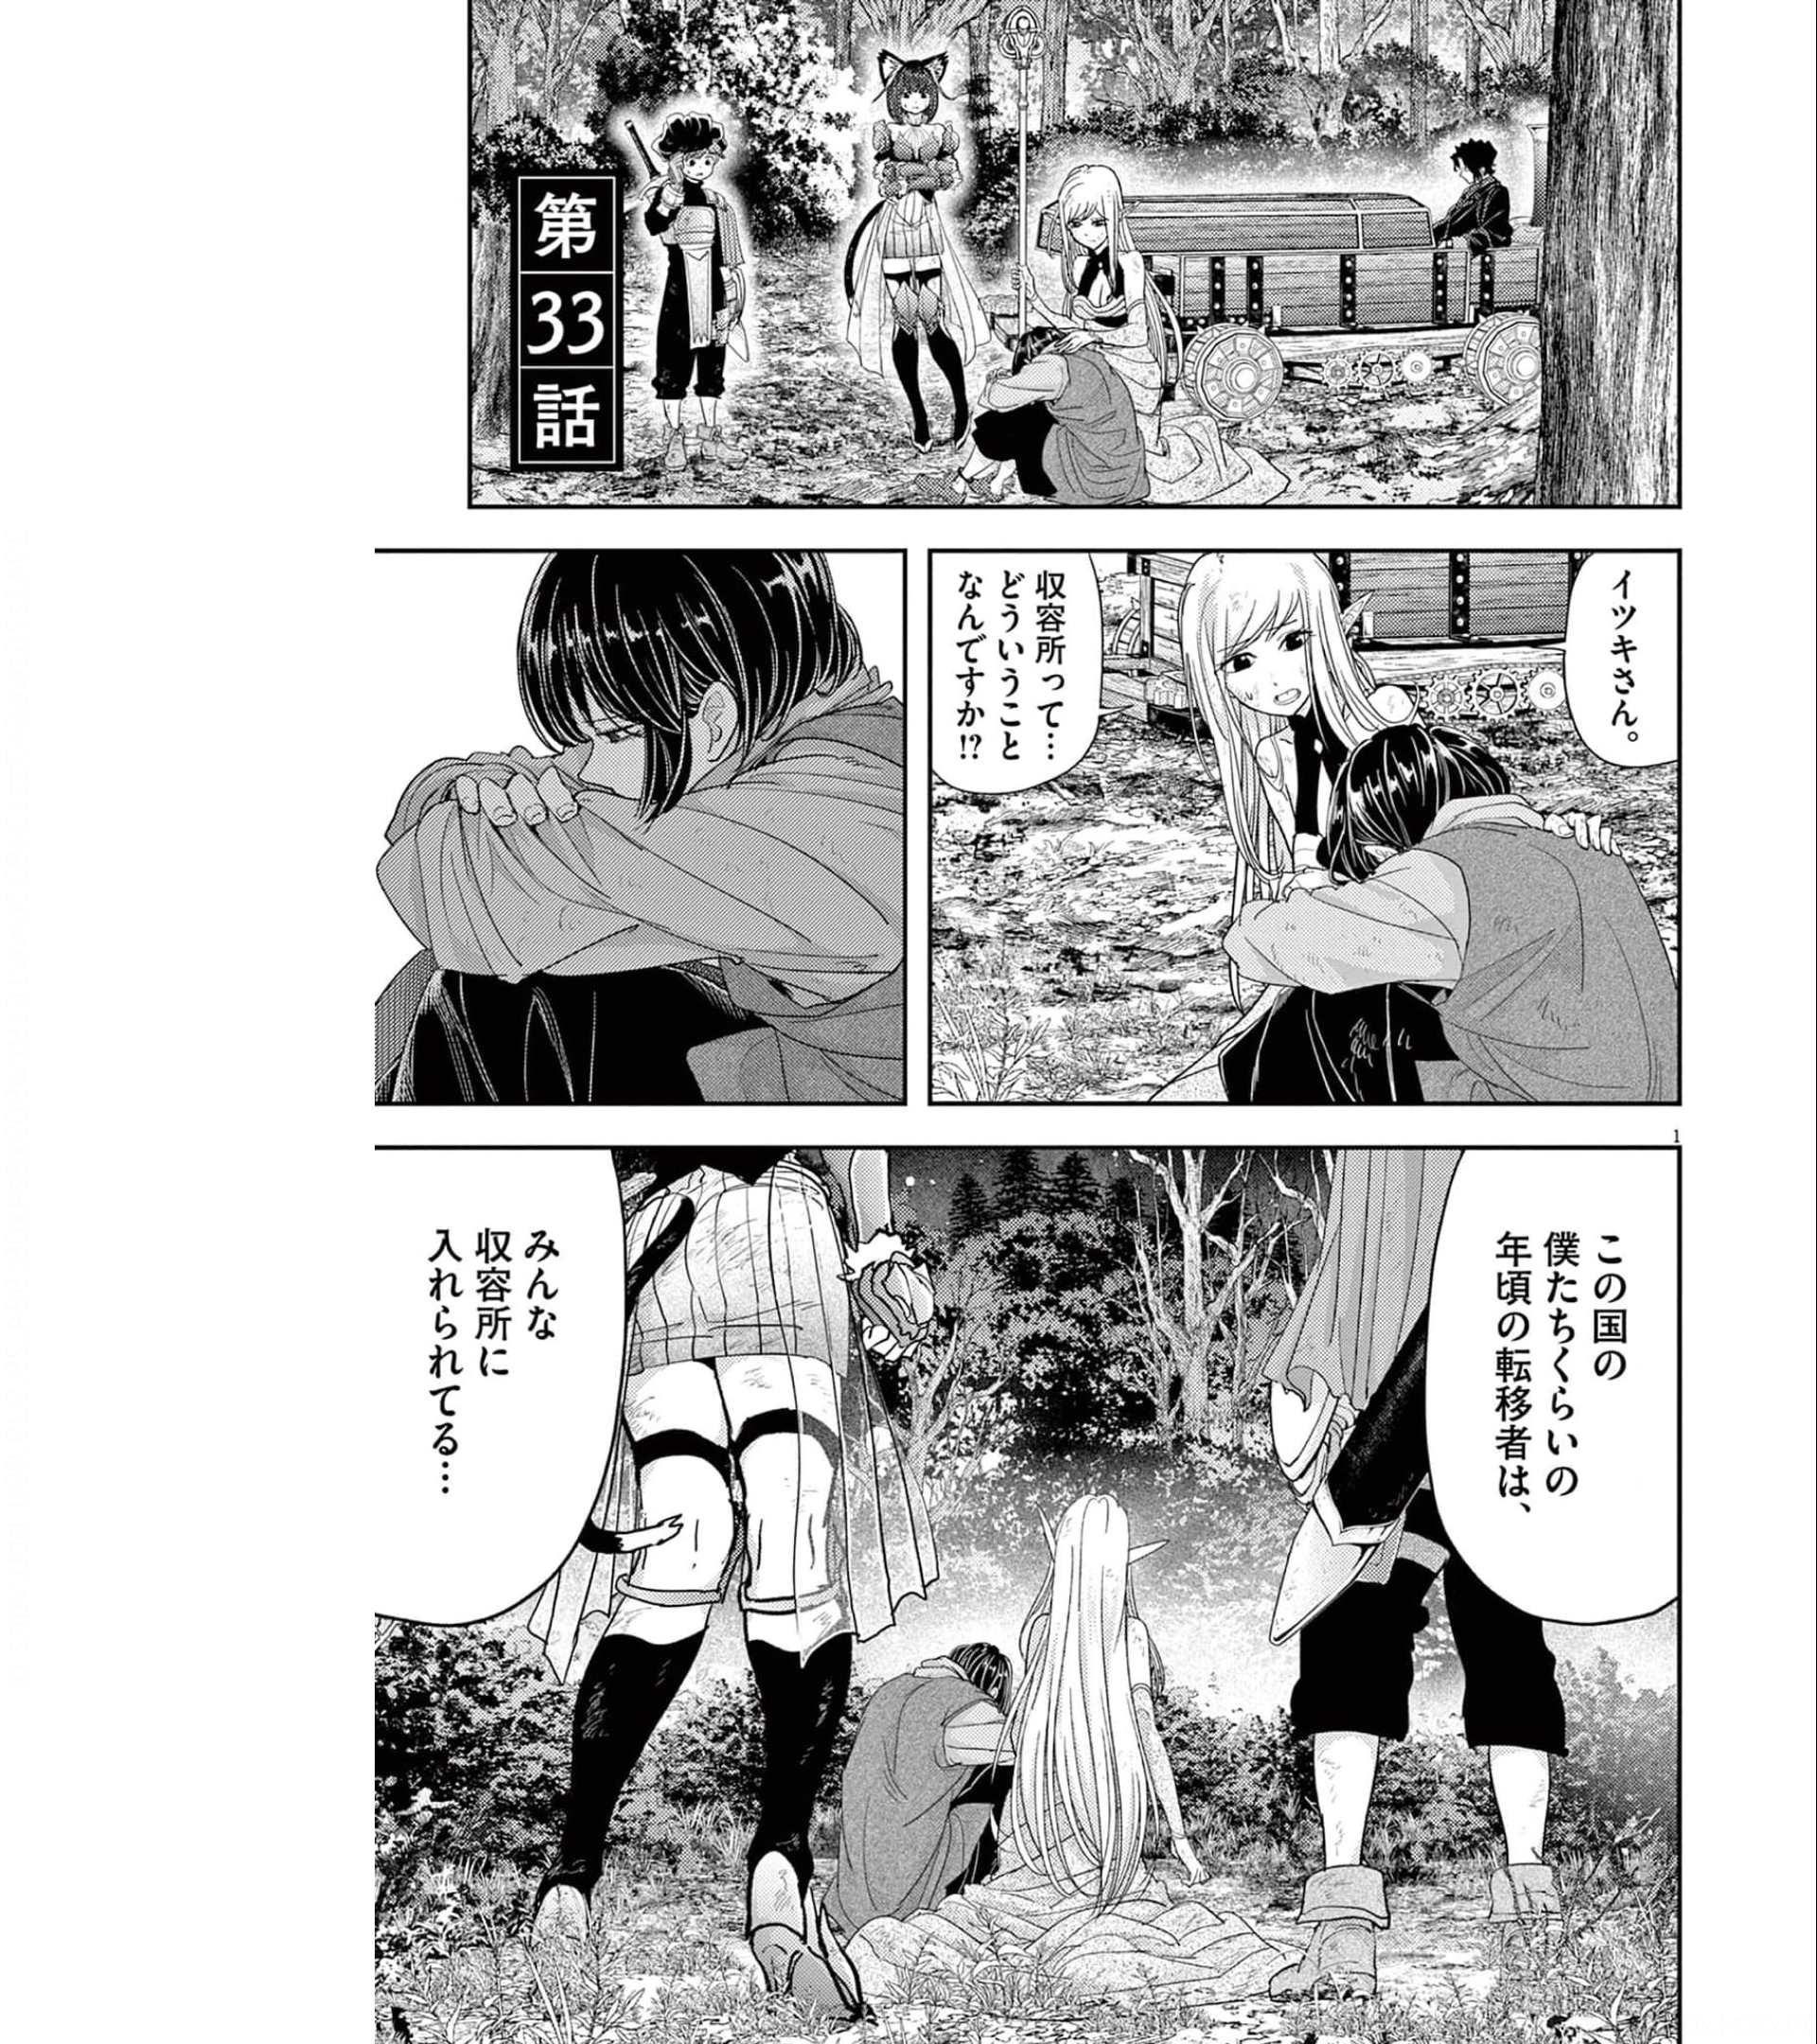 Isekai Shikkaku - Chapter 33 - Page 1